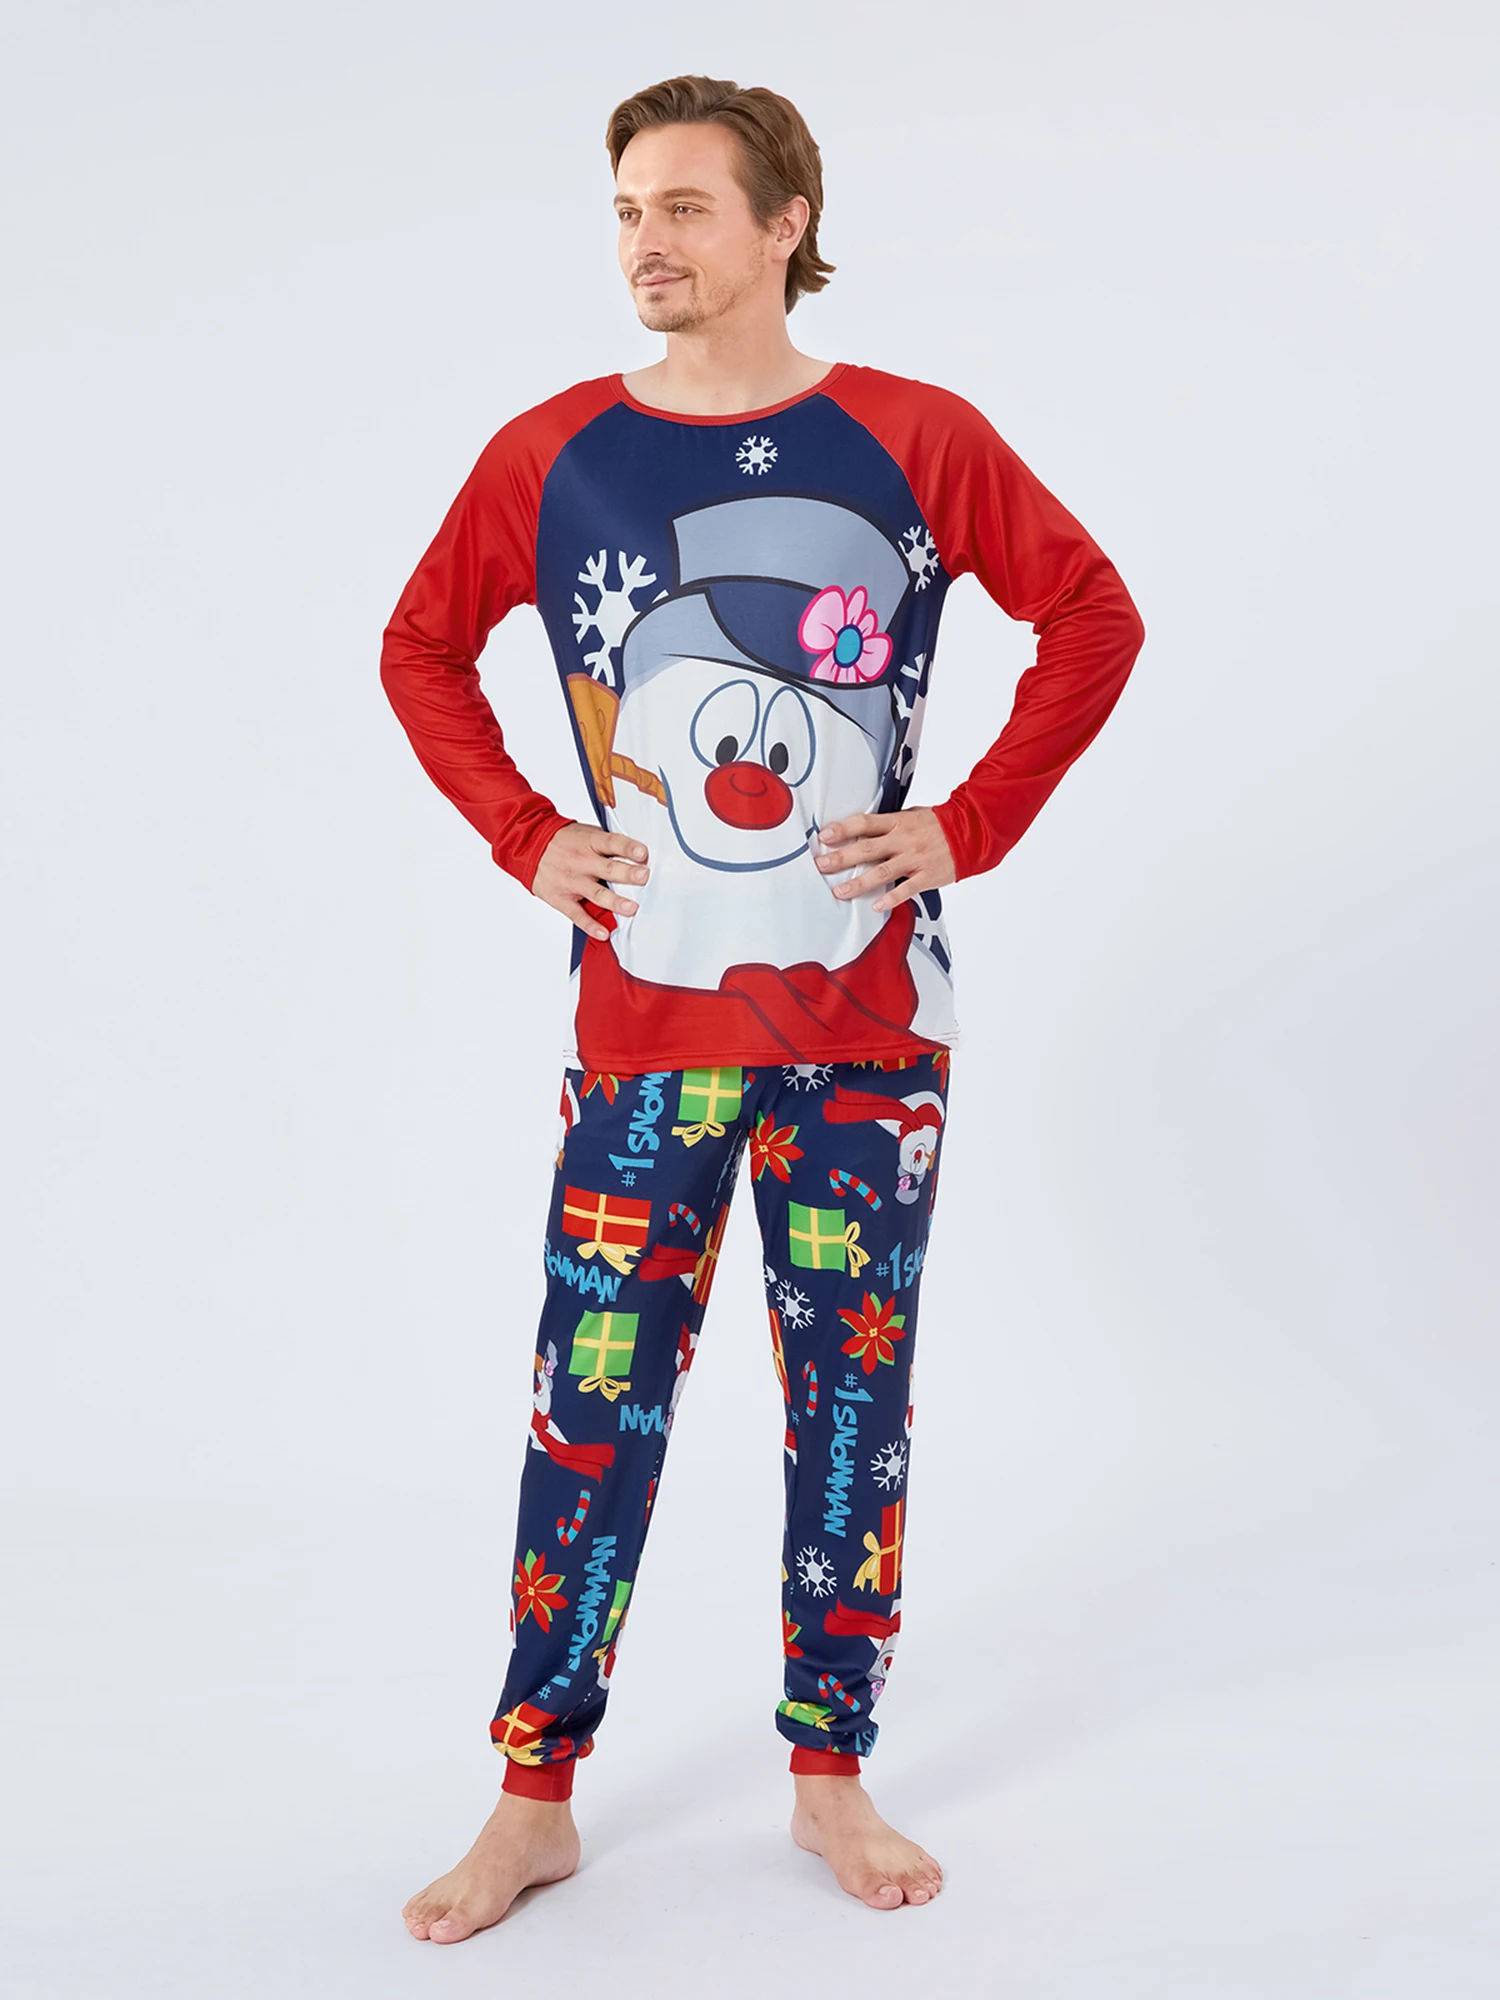 

Family Christmas Matching Pajamas 2023 Xmas Pjs Matching Snowman Print Tops Pants Holiday Home Sleepwear Family Look Outfits